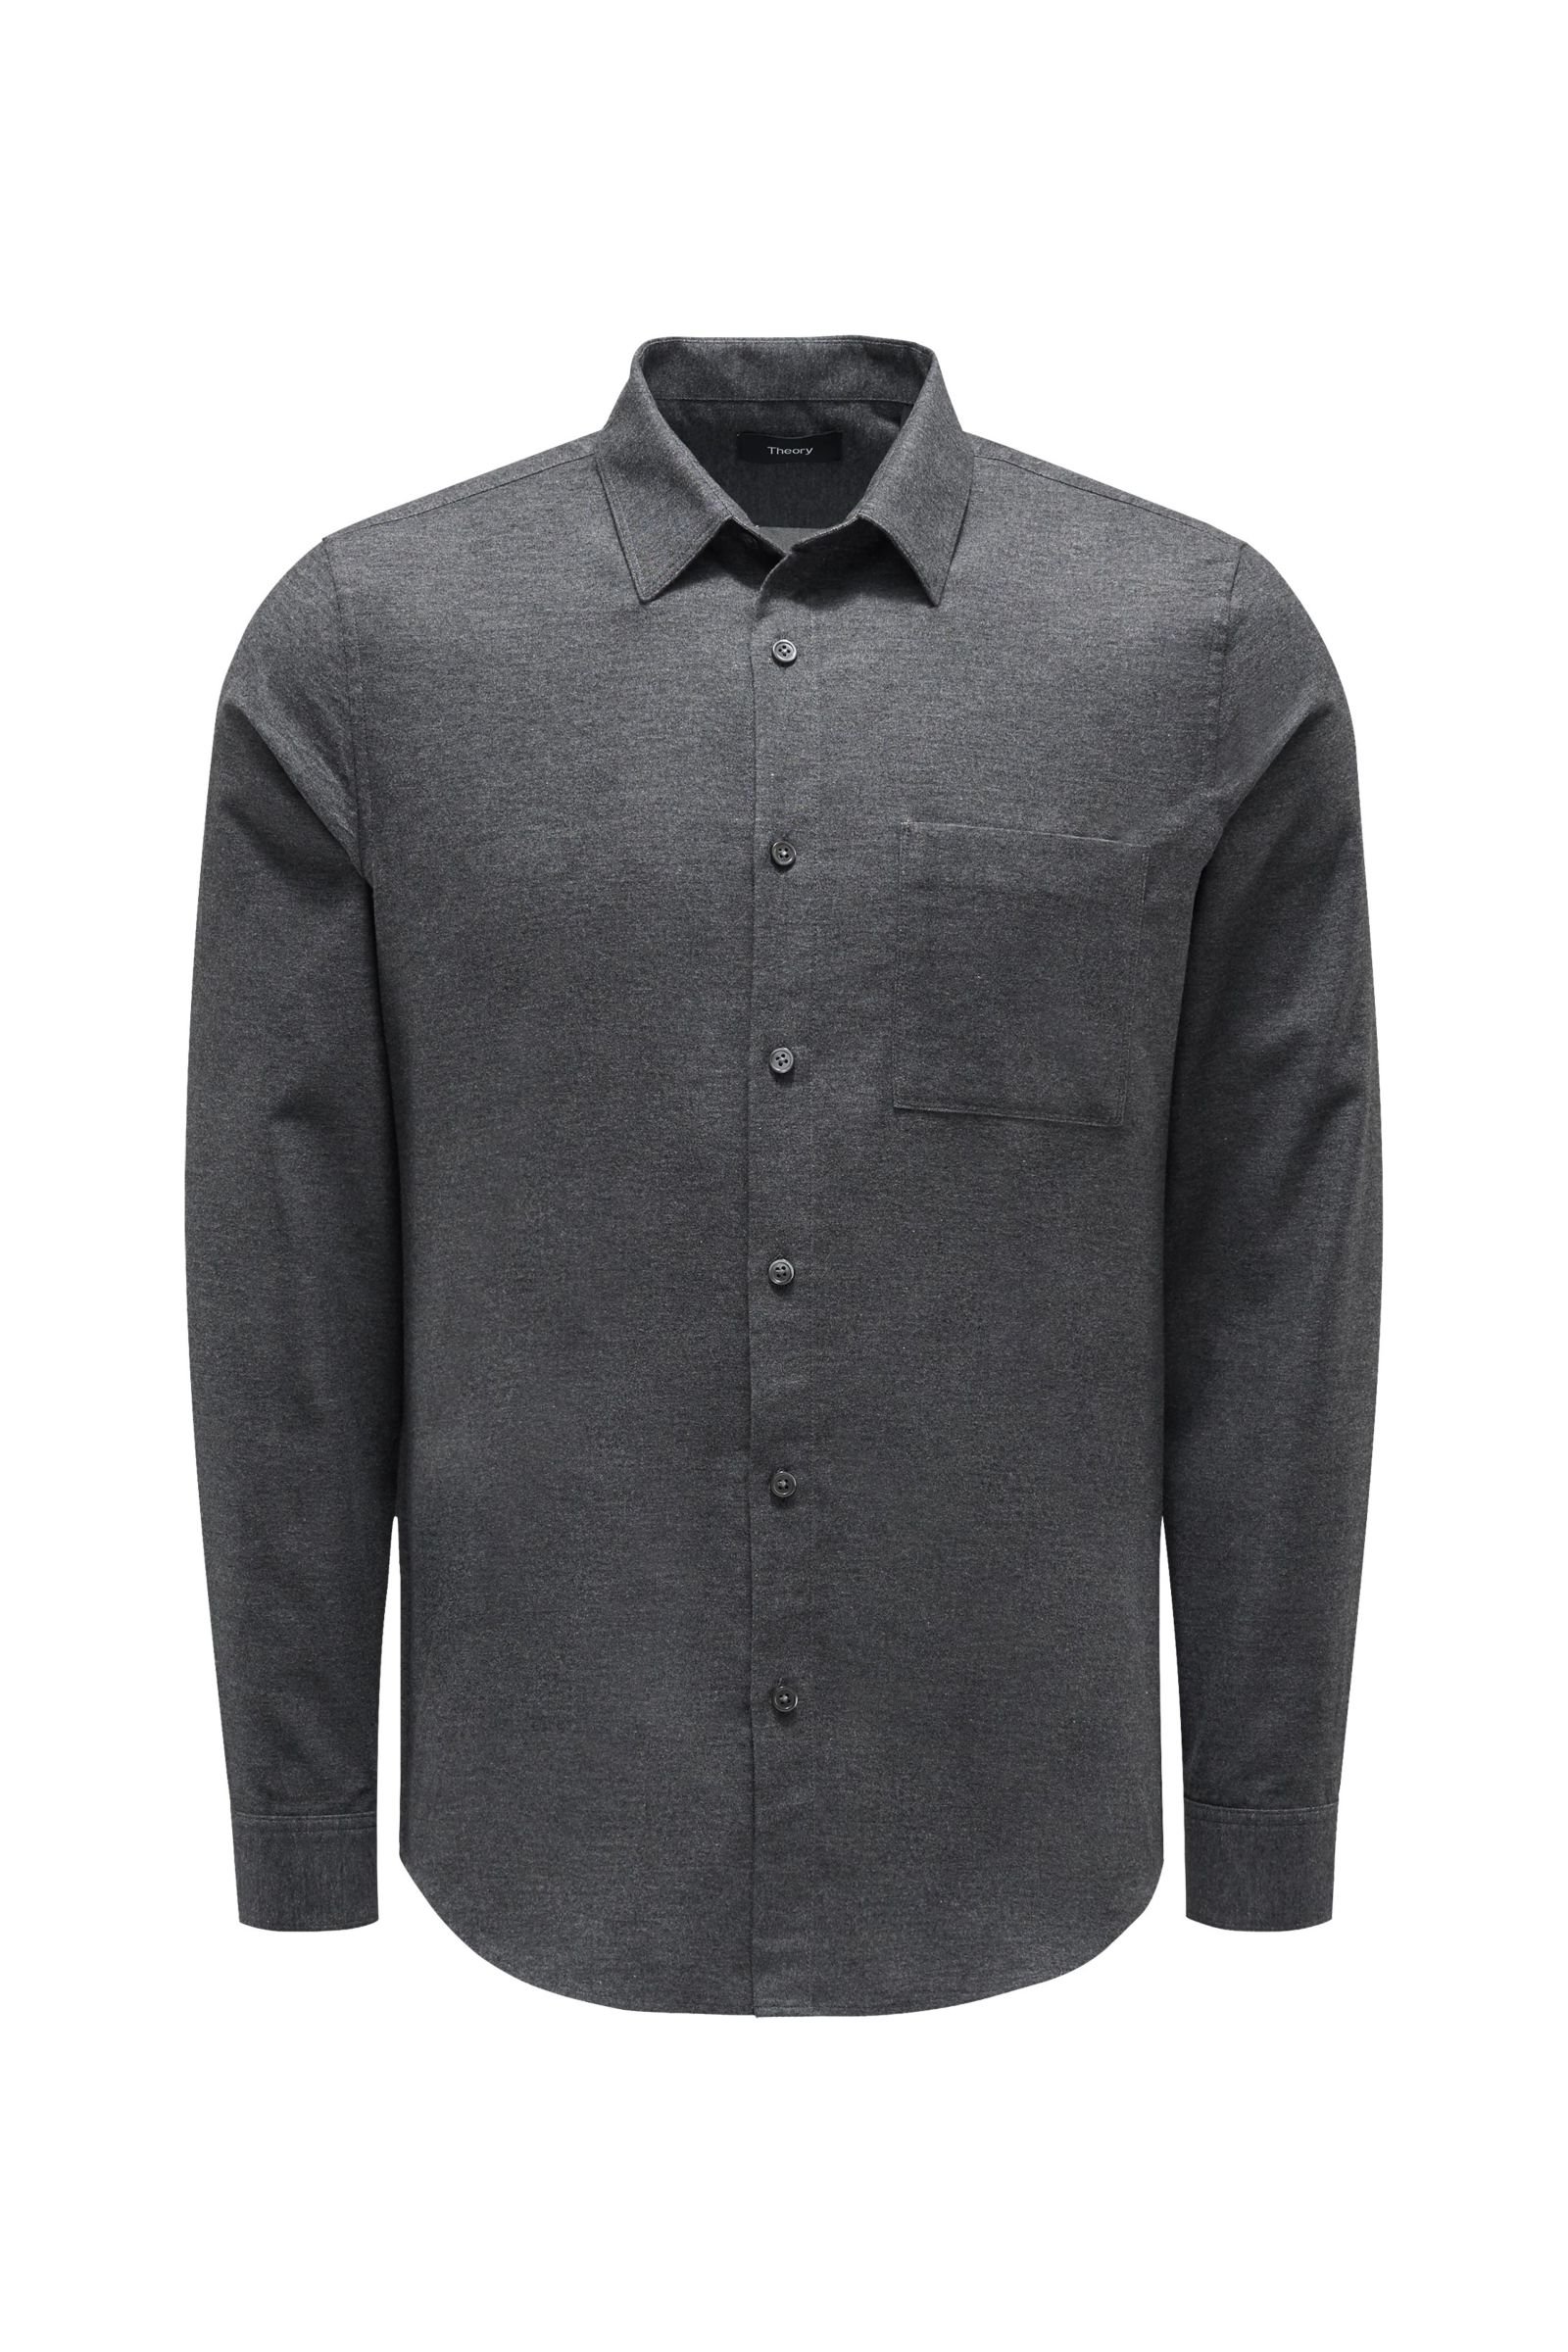 Flannel shirt 'Irving' slim collar grey